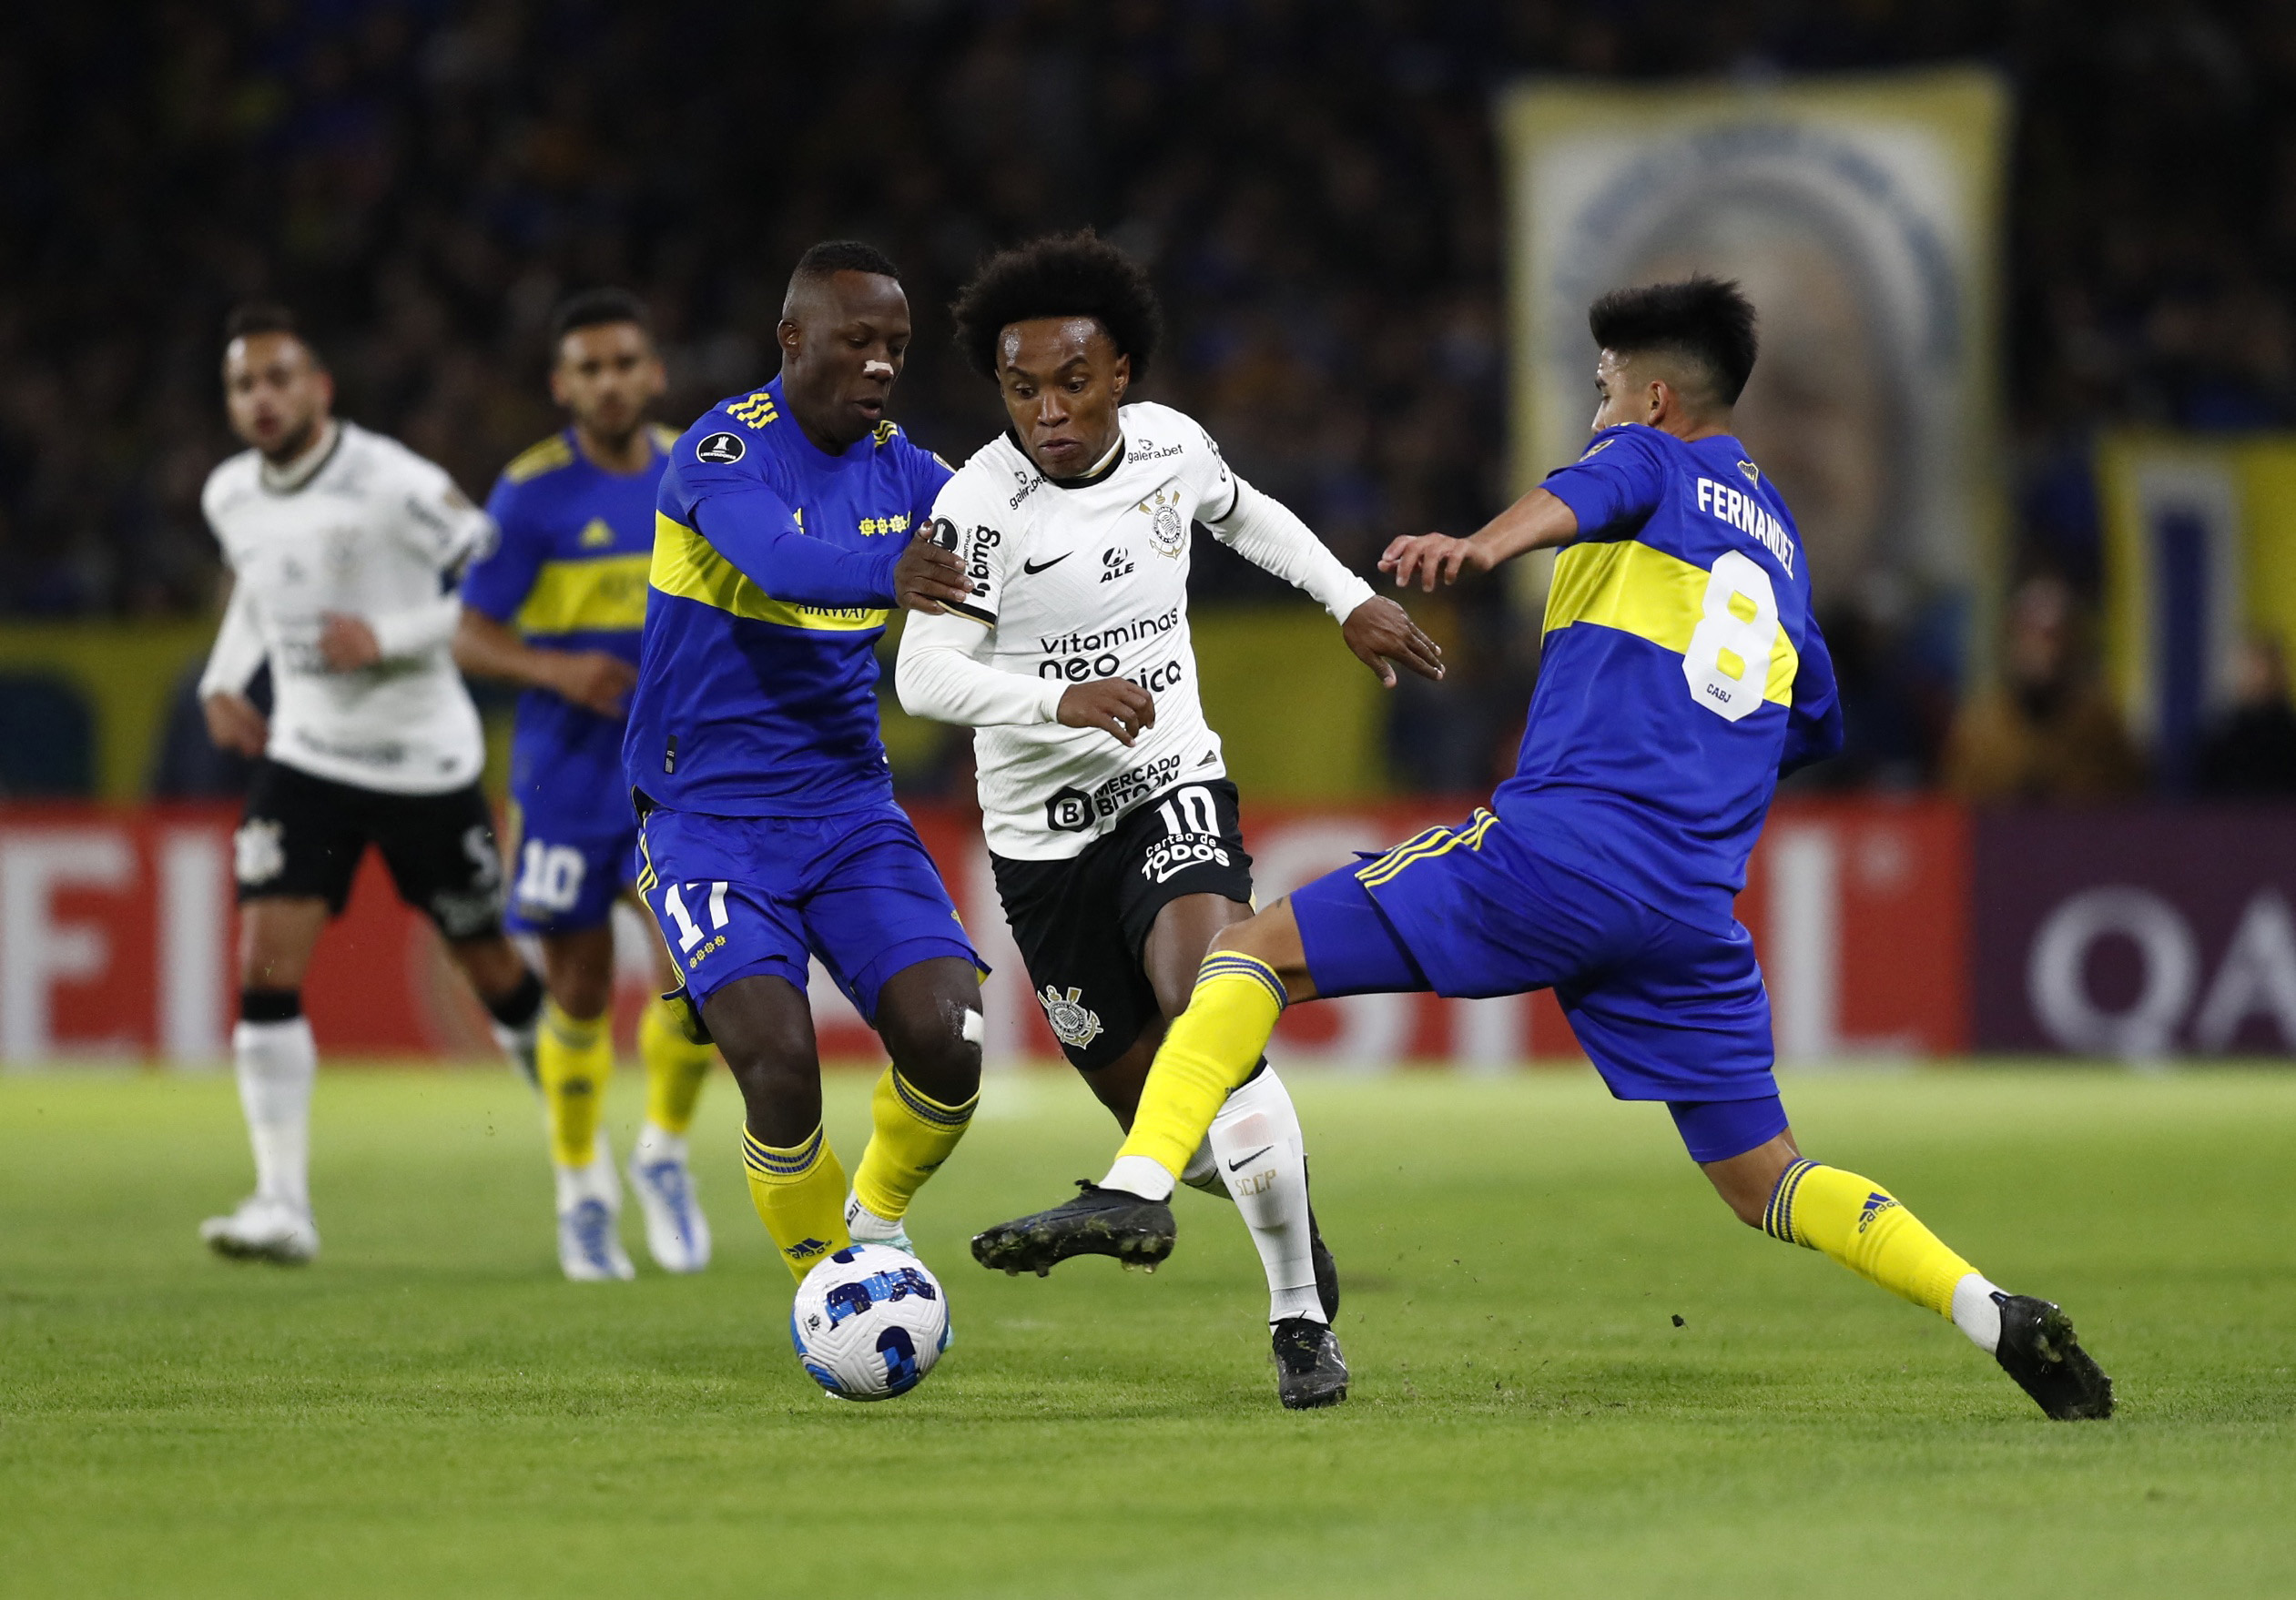 Con Advíncula y Zambrano titulares, Boca igualó 1-1 ante Corinthians por Copa Libertadores 2022